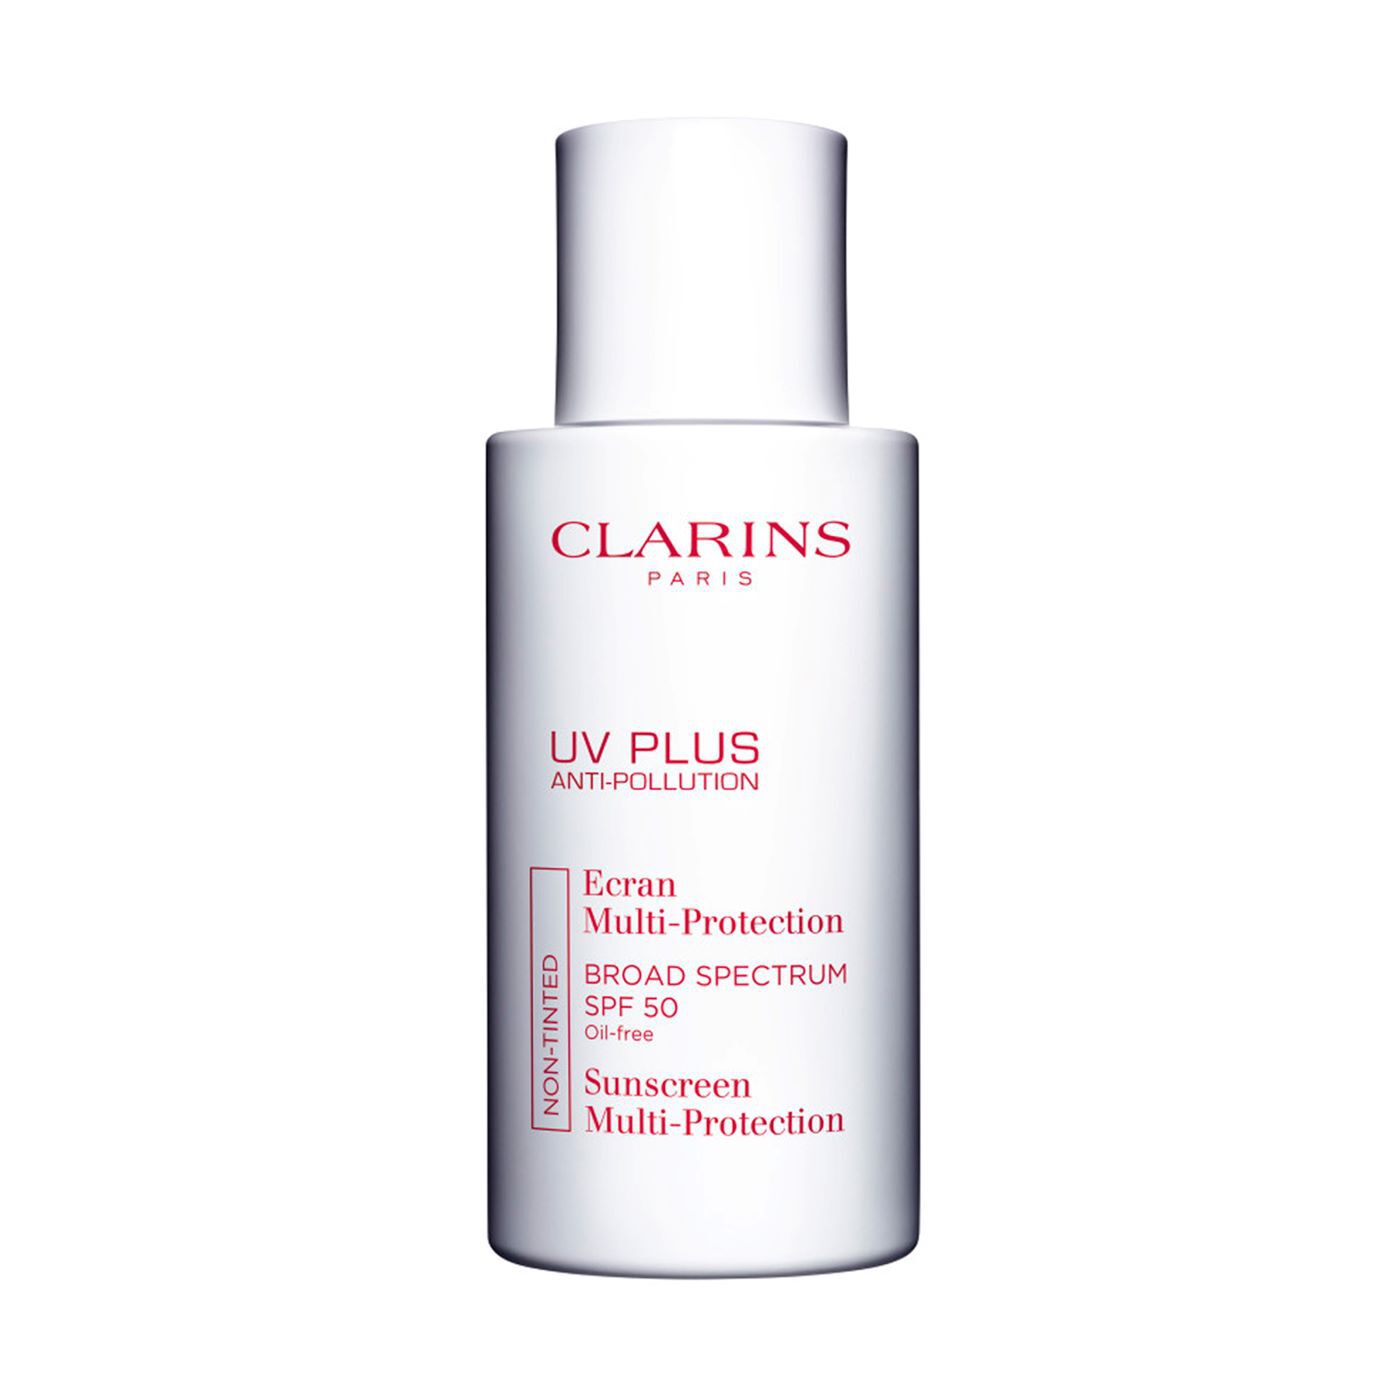 Clarins Uv Plus Spf 50 Anti Pollution Face Sunscreen 1.6 Oz. - Neutral In White